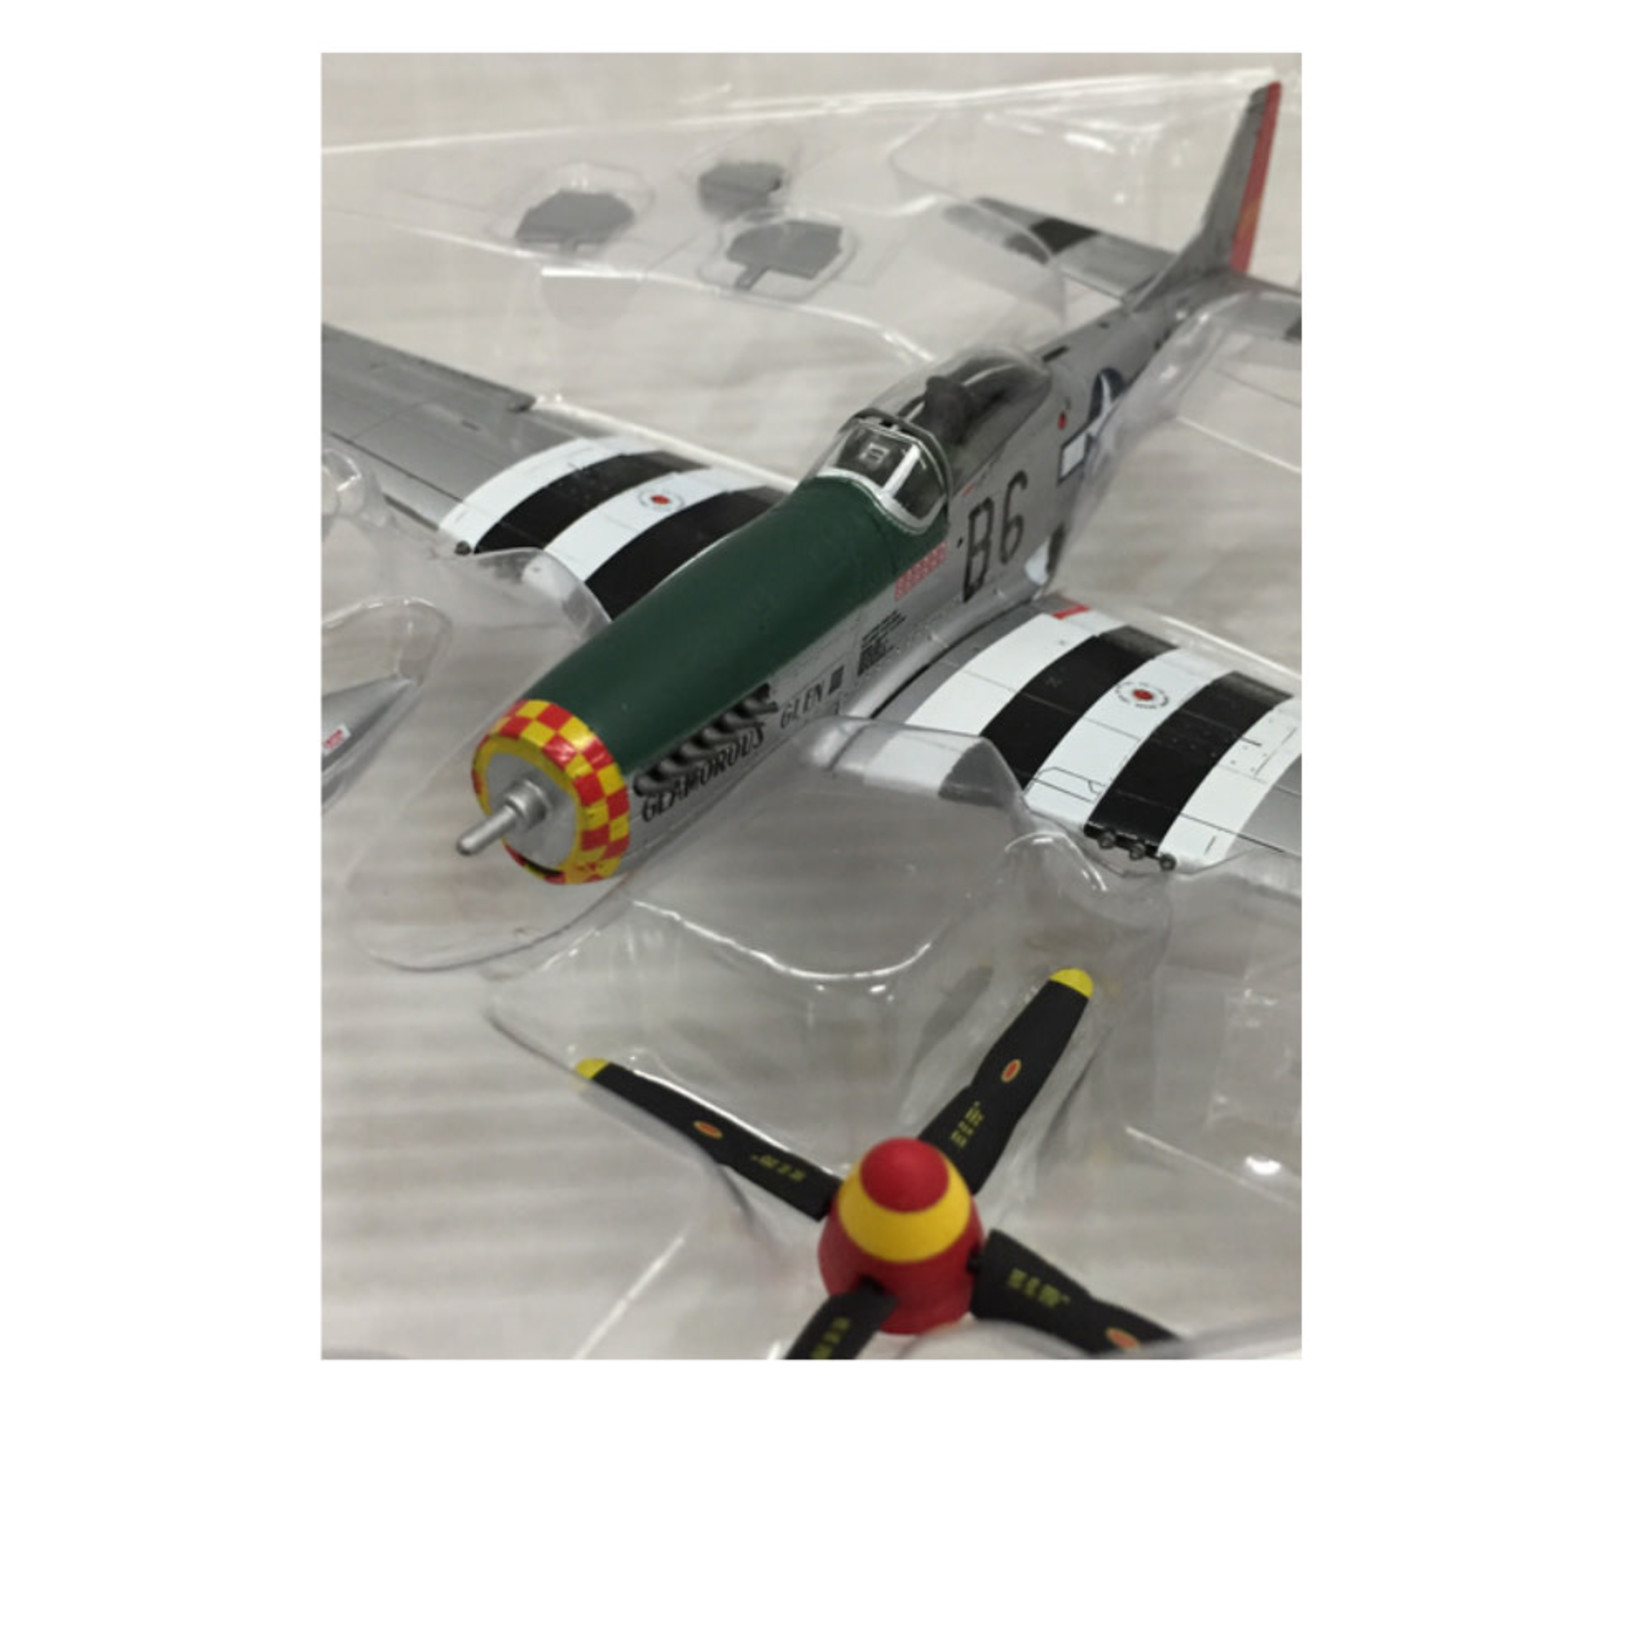 DRAGON DRAGON WINGS 1:72 WWII WARBIRDS SERIES P-51D MUSTANG ‘GLAMOROUS GLENNIS’